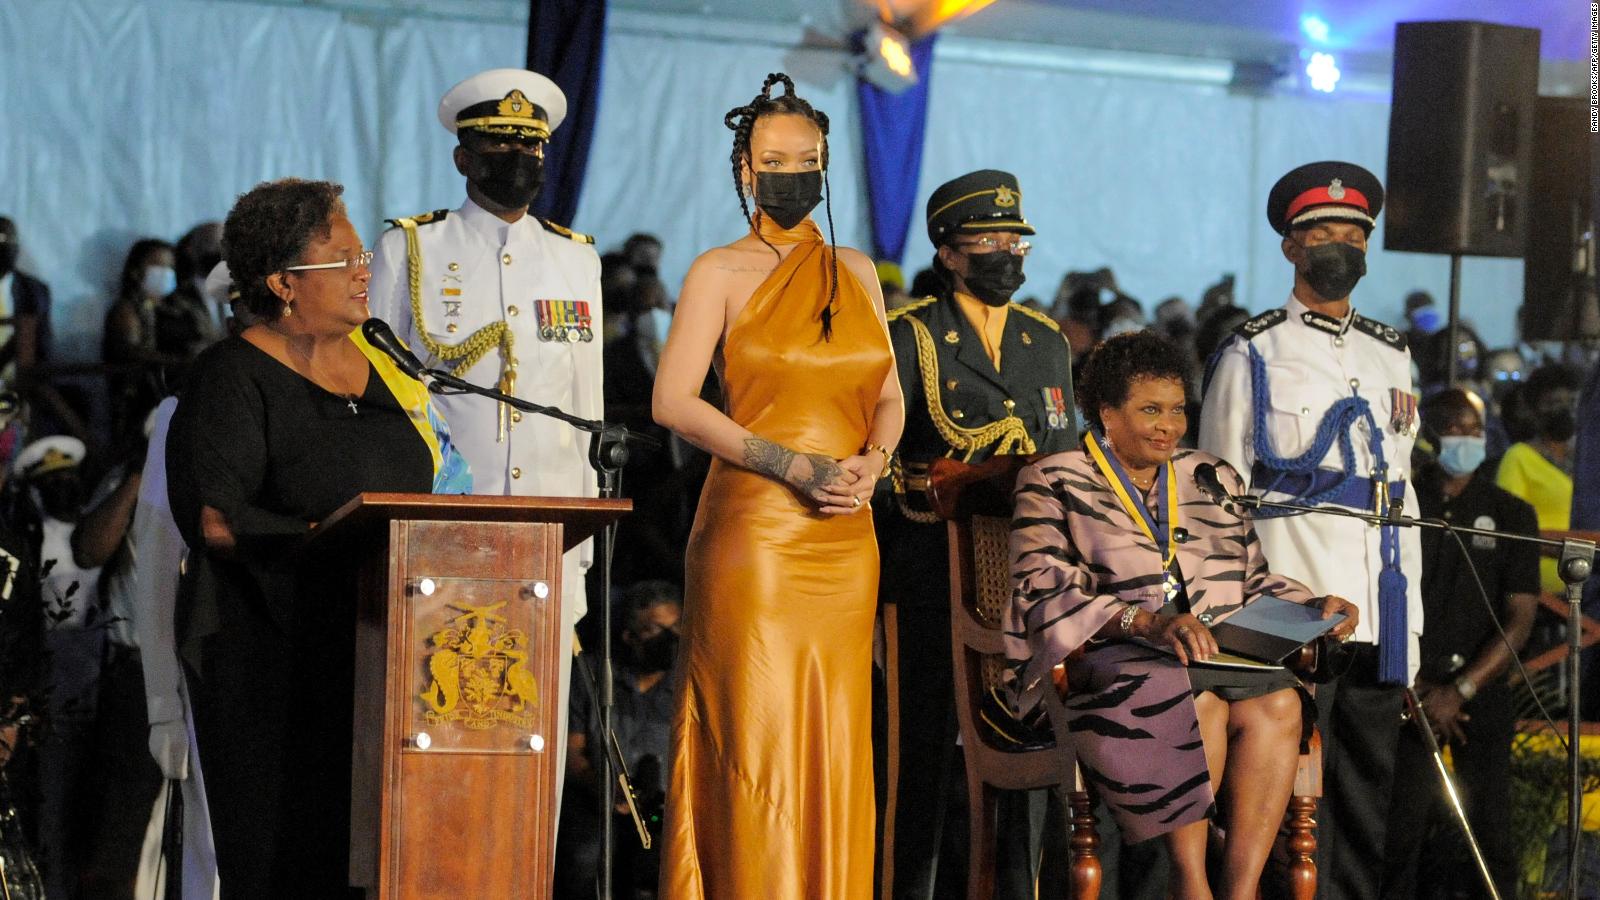 Rihanna honored as 'national hero' of Barbados - CNN